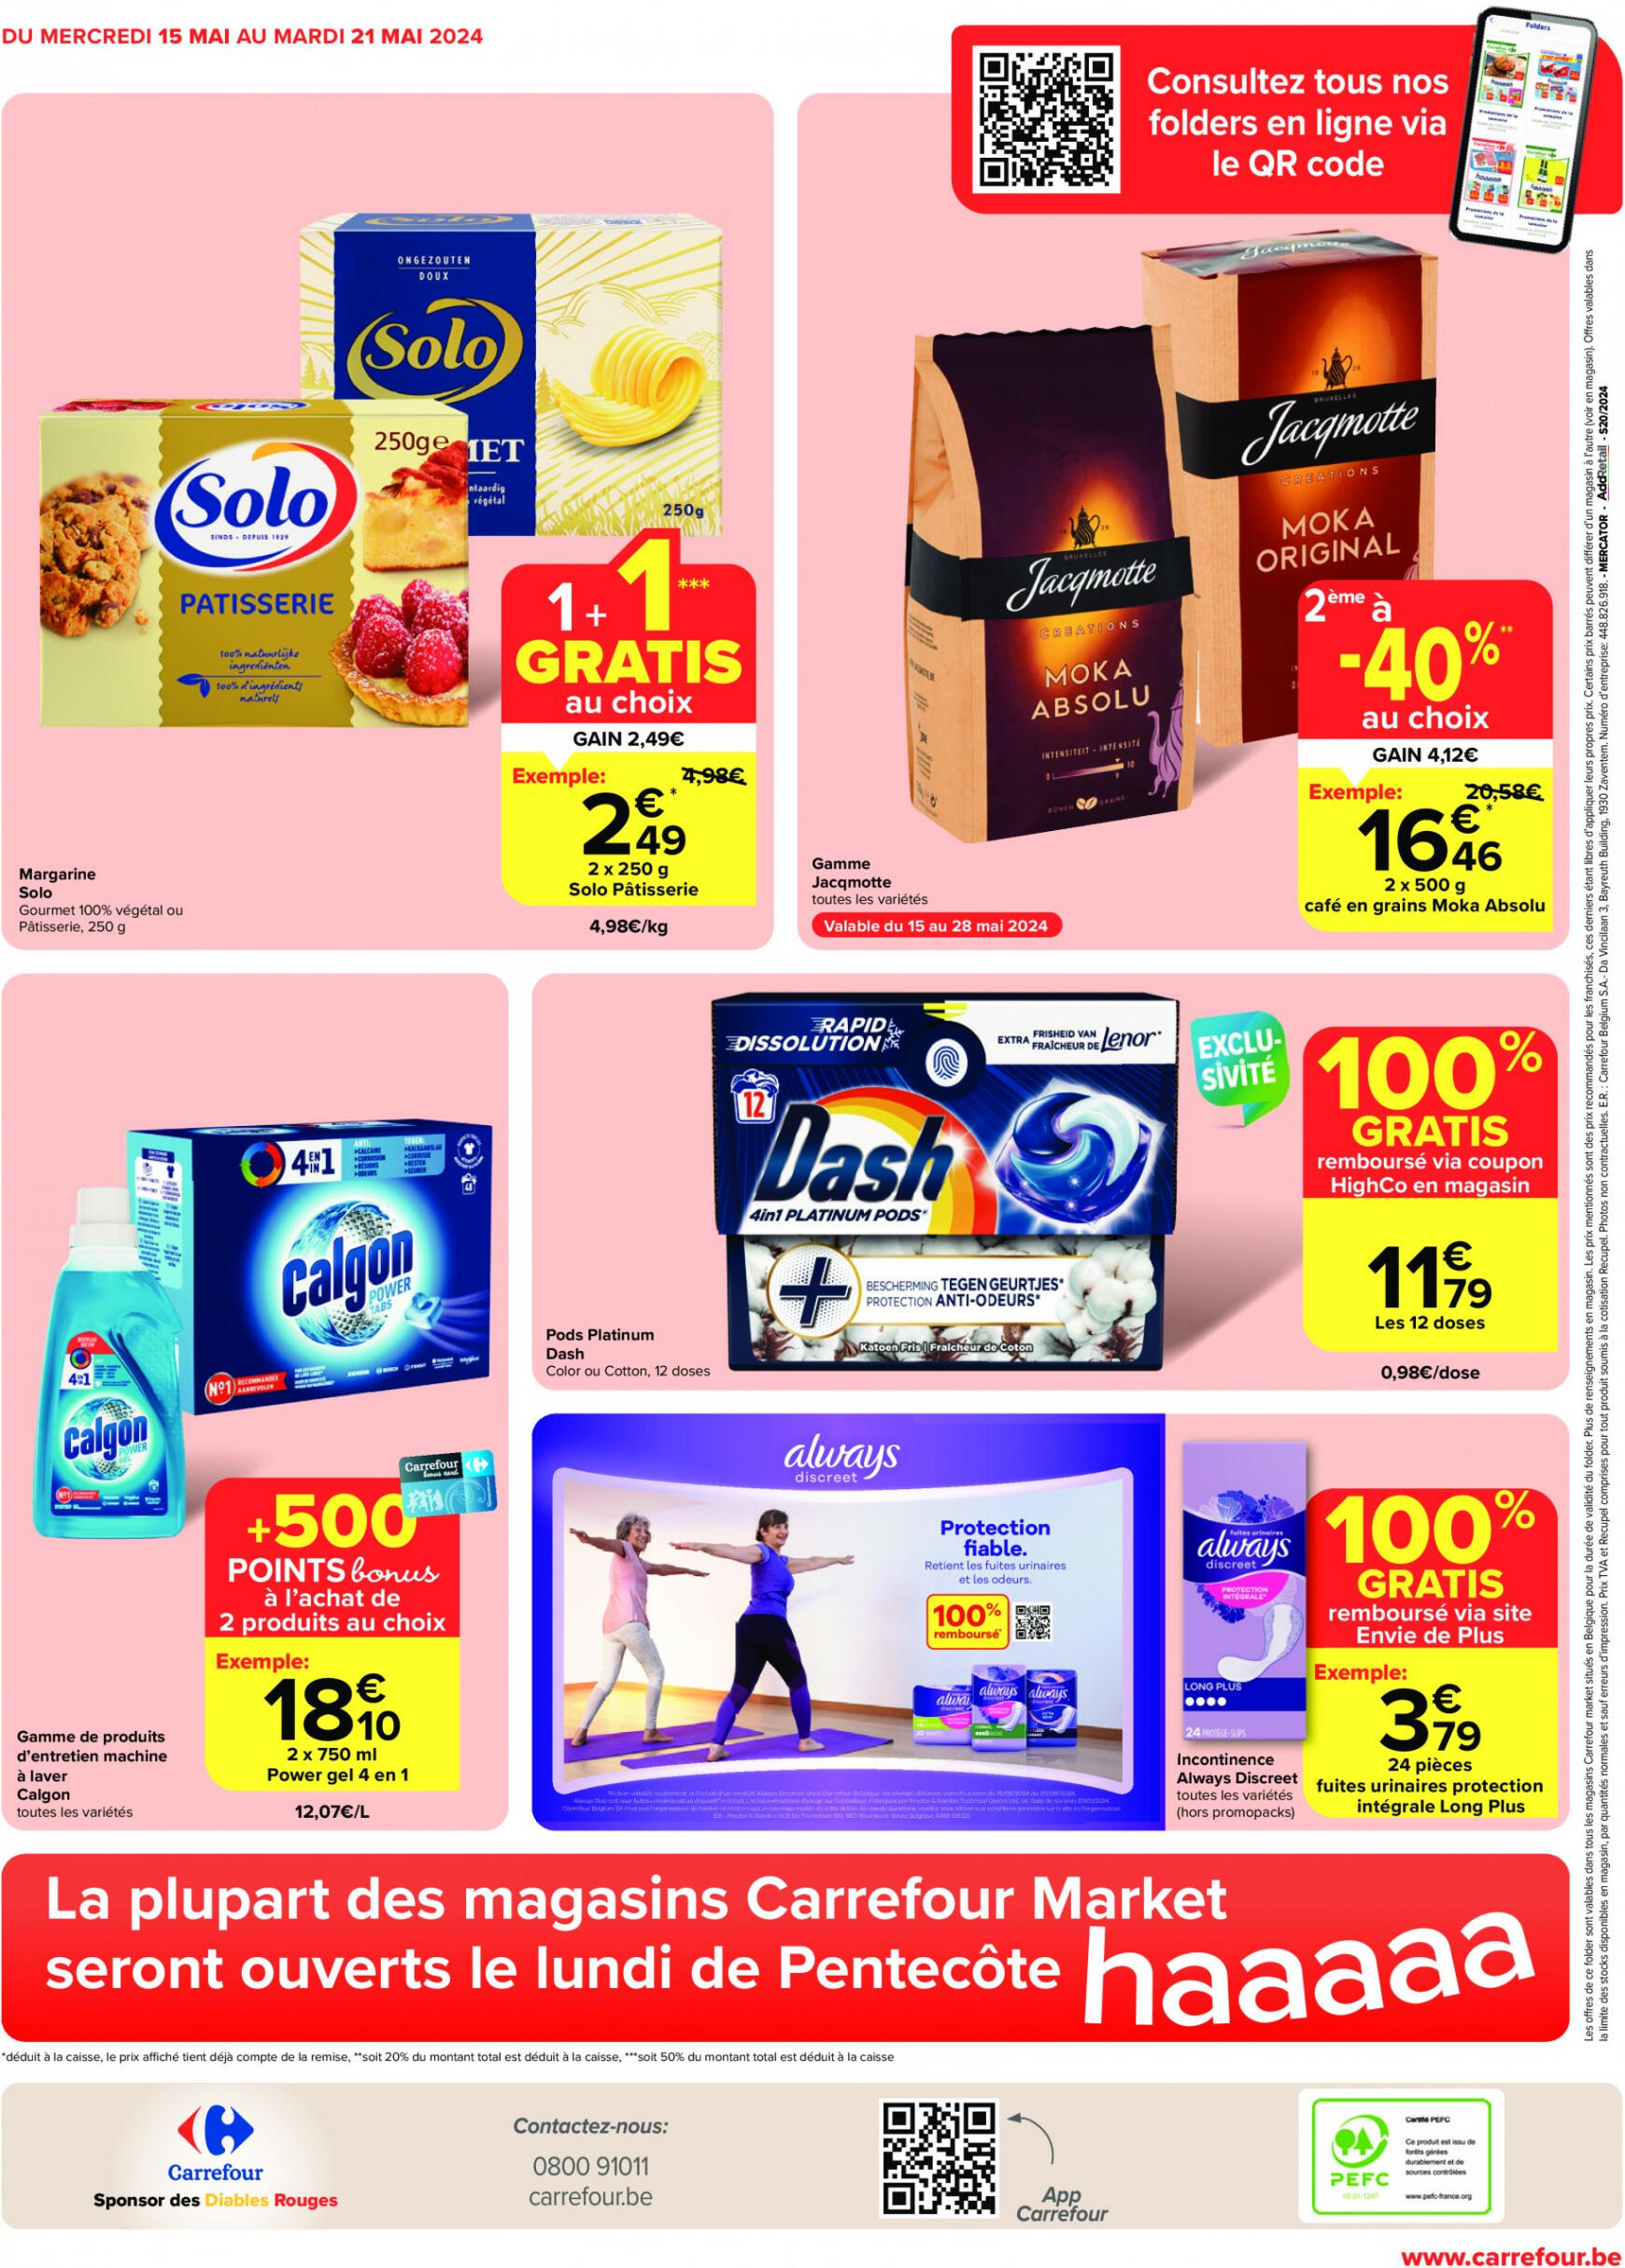 carrefour - Carrefour folder huidig 15.05. - 28.05. - page: 12